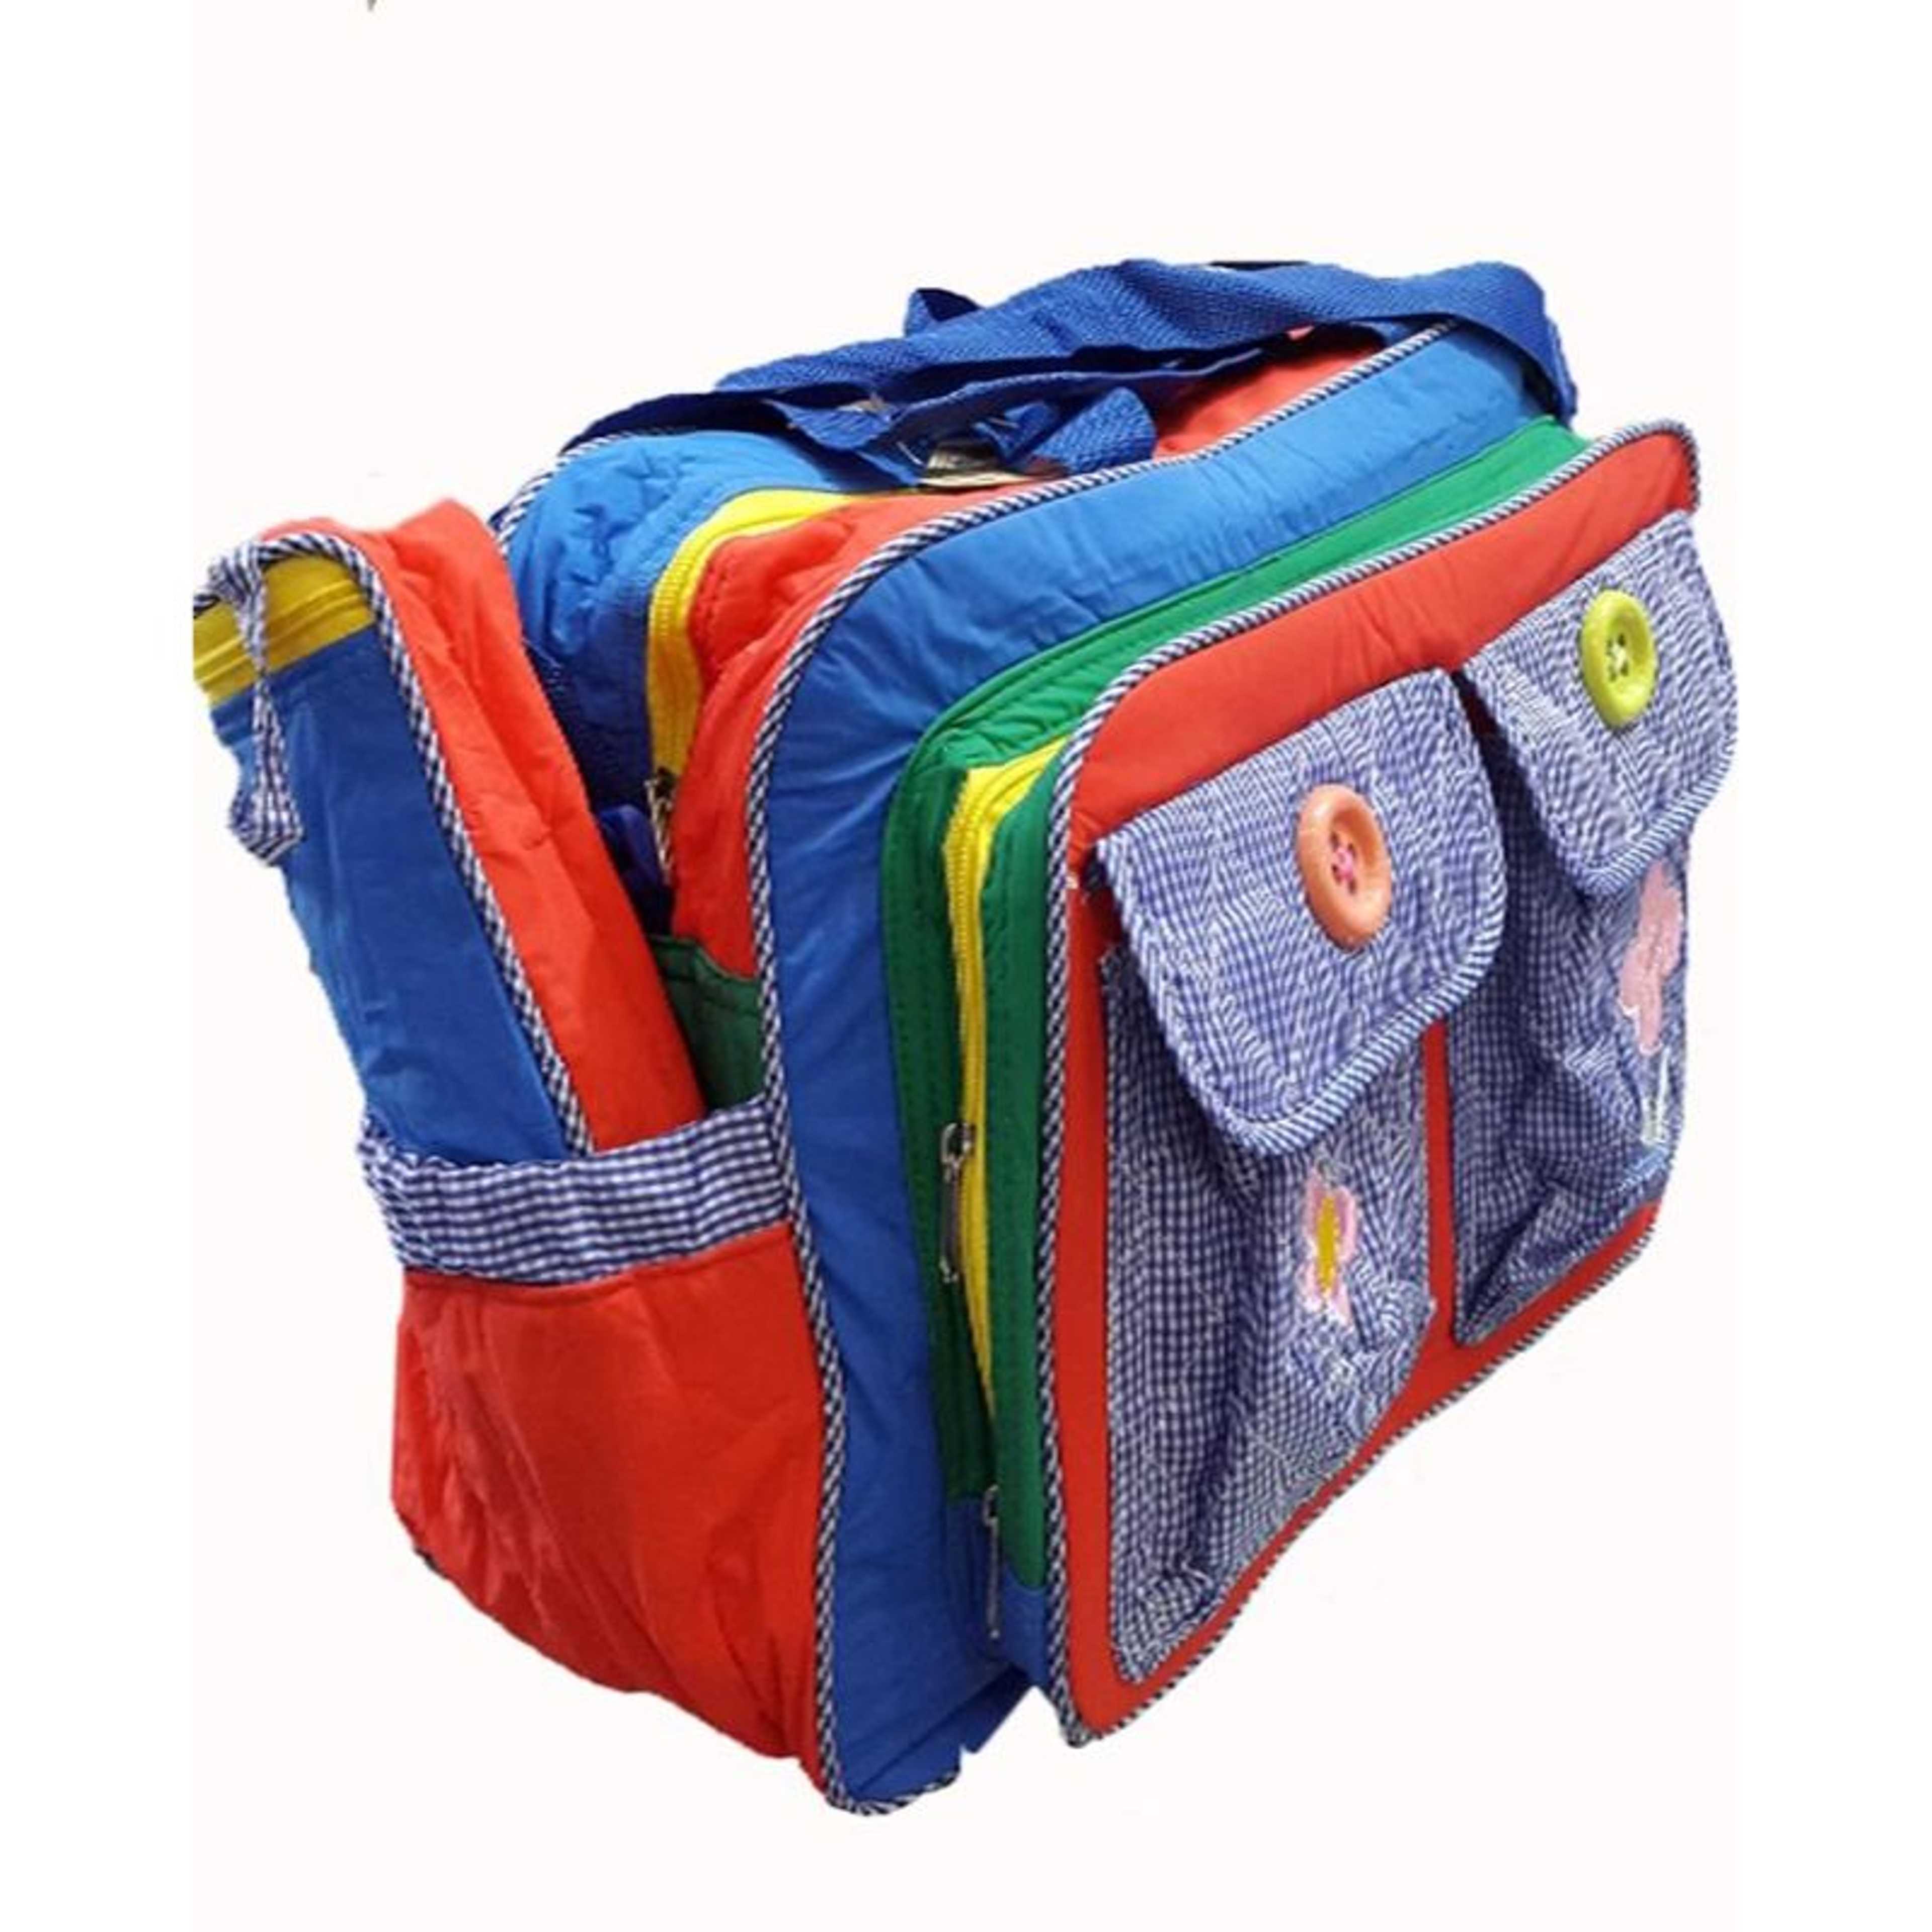 Smart Travel Bag for Babies - Multicolor